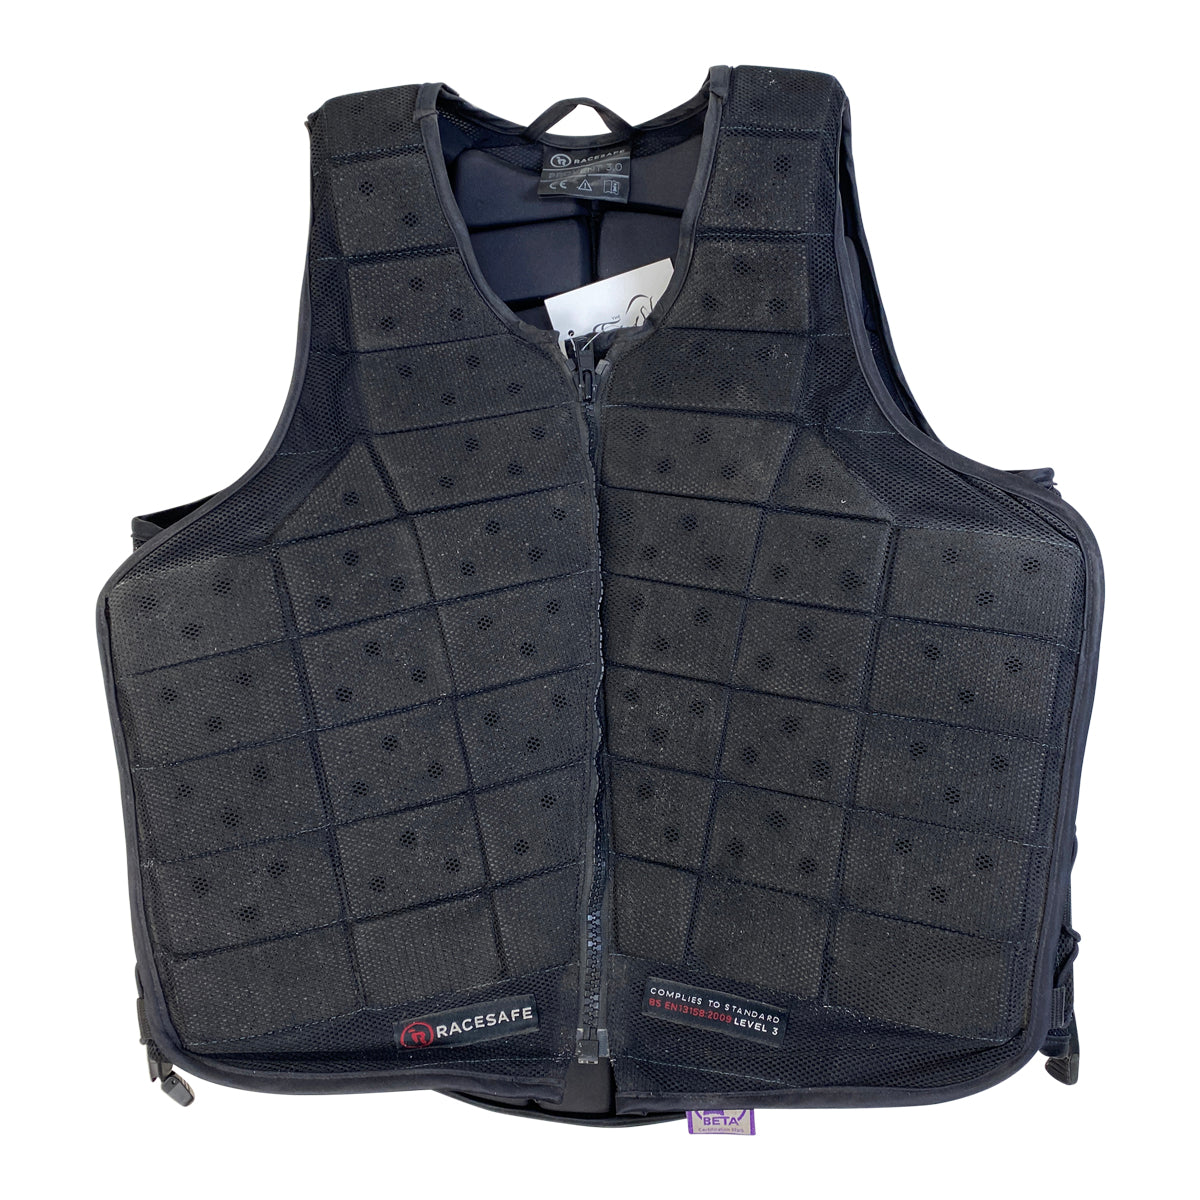 RaceSafe ProVent 3.0 Safety Vest in Black